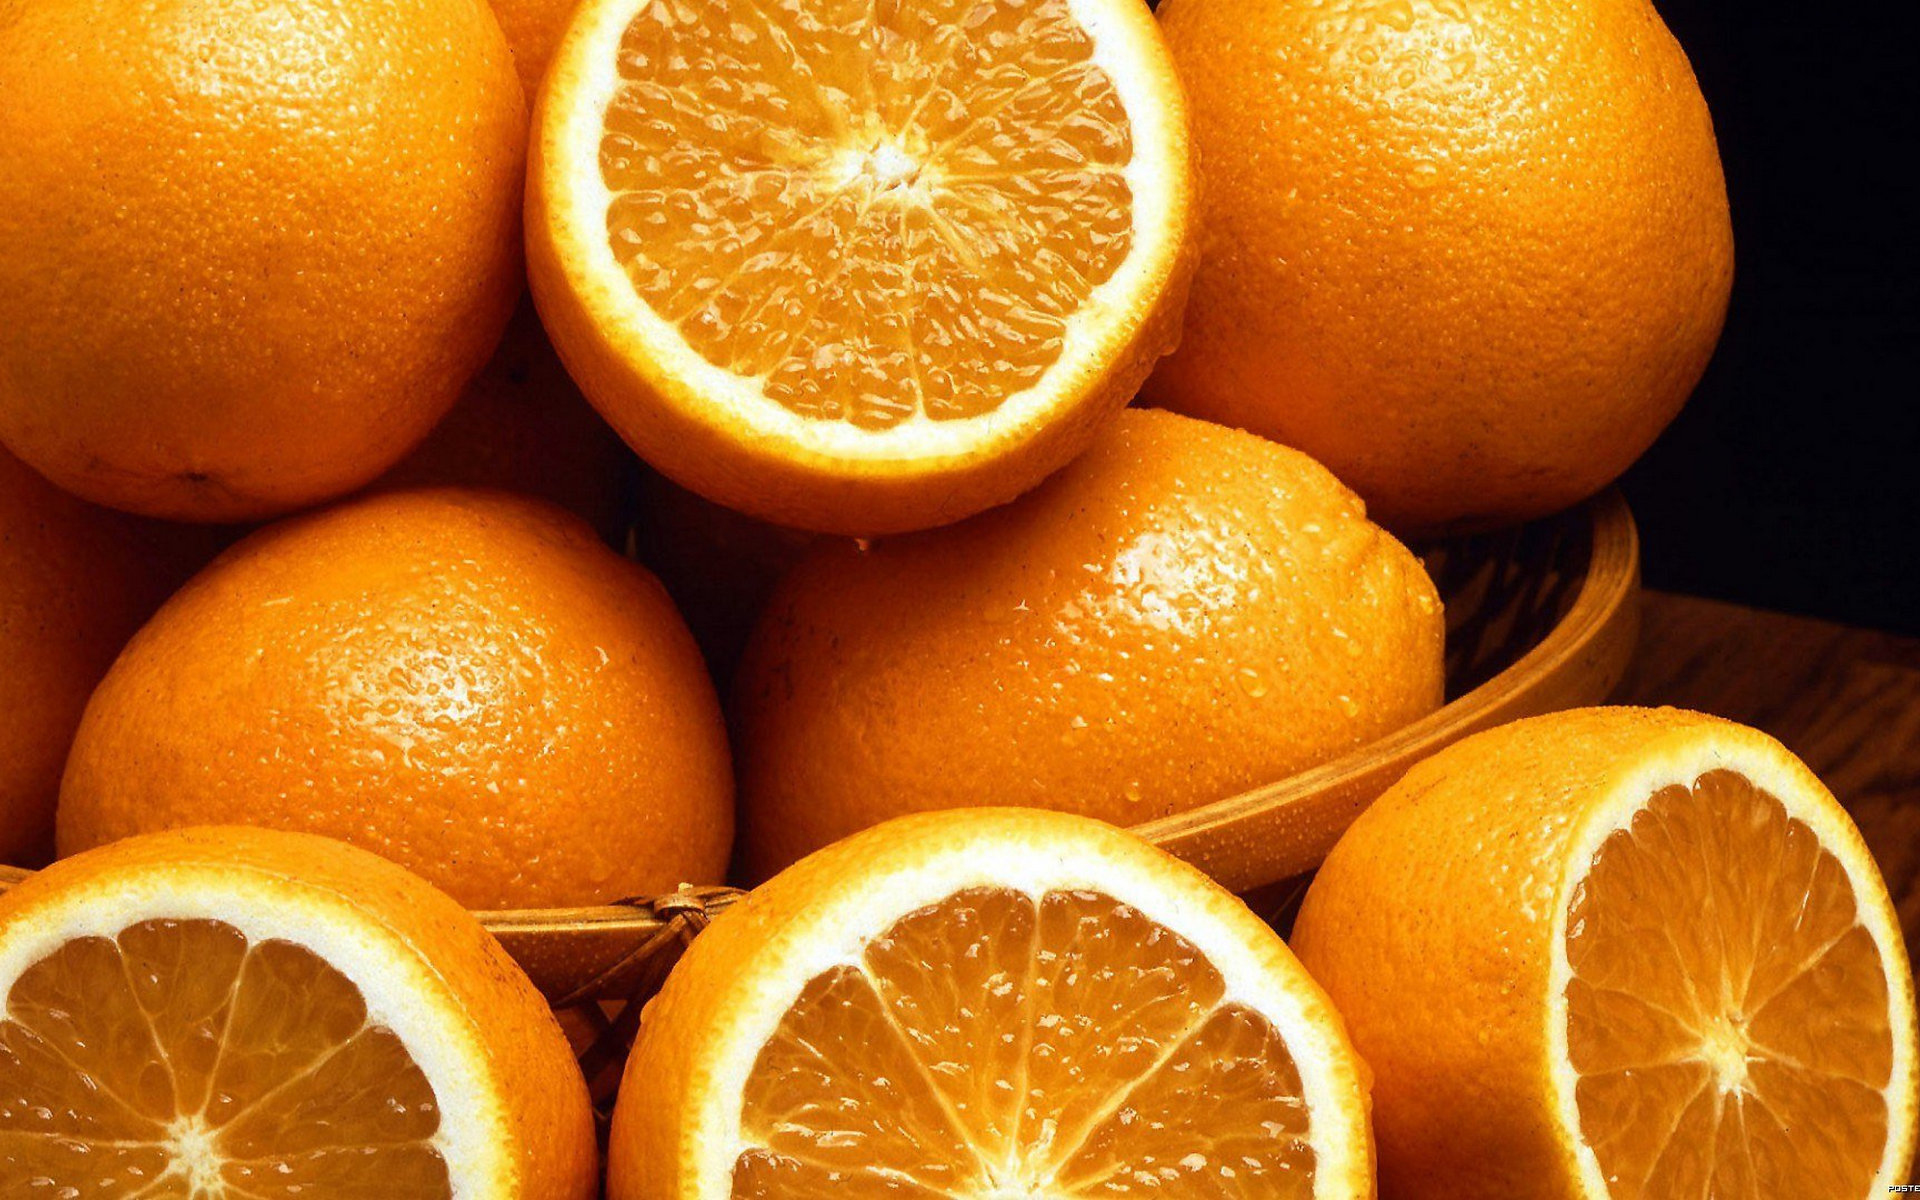 Wallpapers fruits oranges orange on the desktop